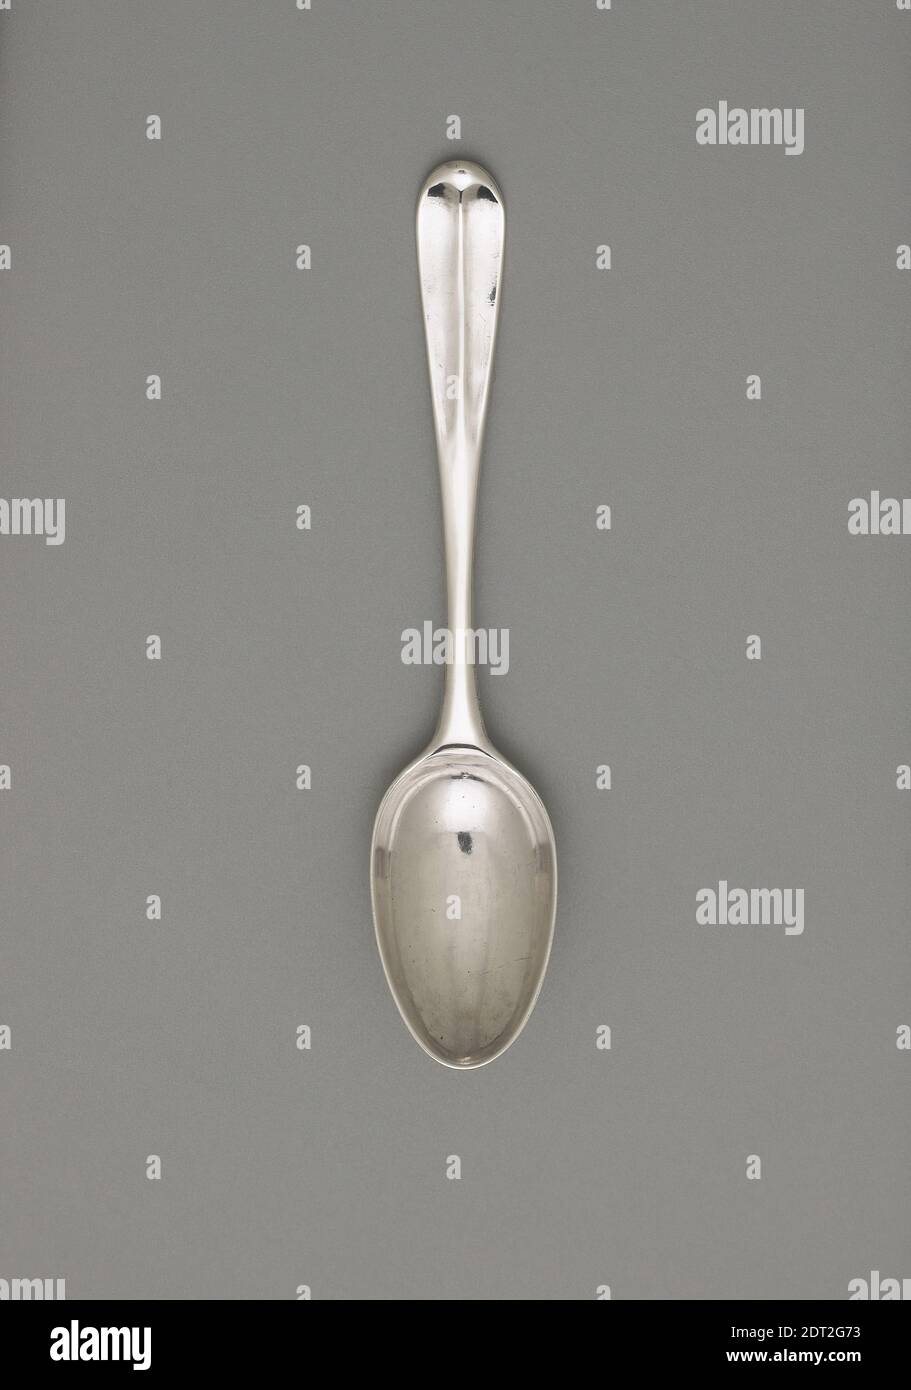 https://c8.alamy.com/comp/2DT2G73/maker-myer-myers-american-17231795-teaspoon-silver-4-14-1516-in-108-24cm-made-in-new-york-new-york-american-18thcentury-flatware-2DT2G73.jpg